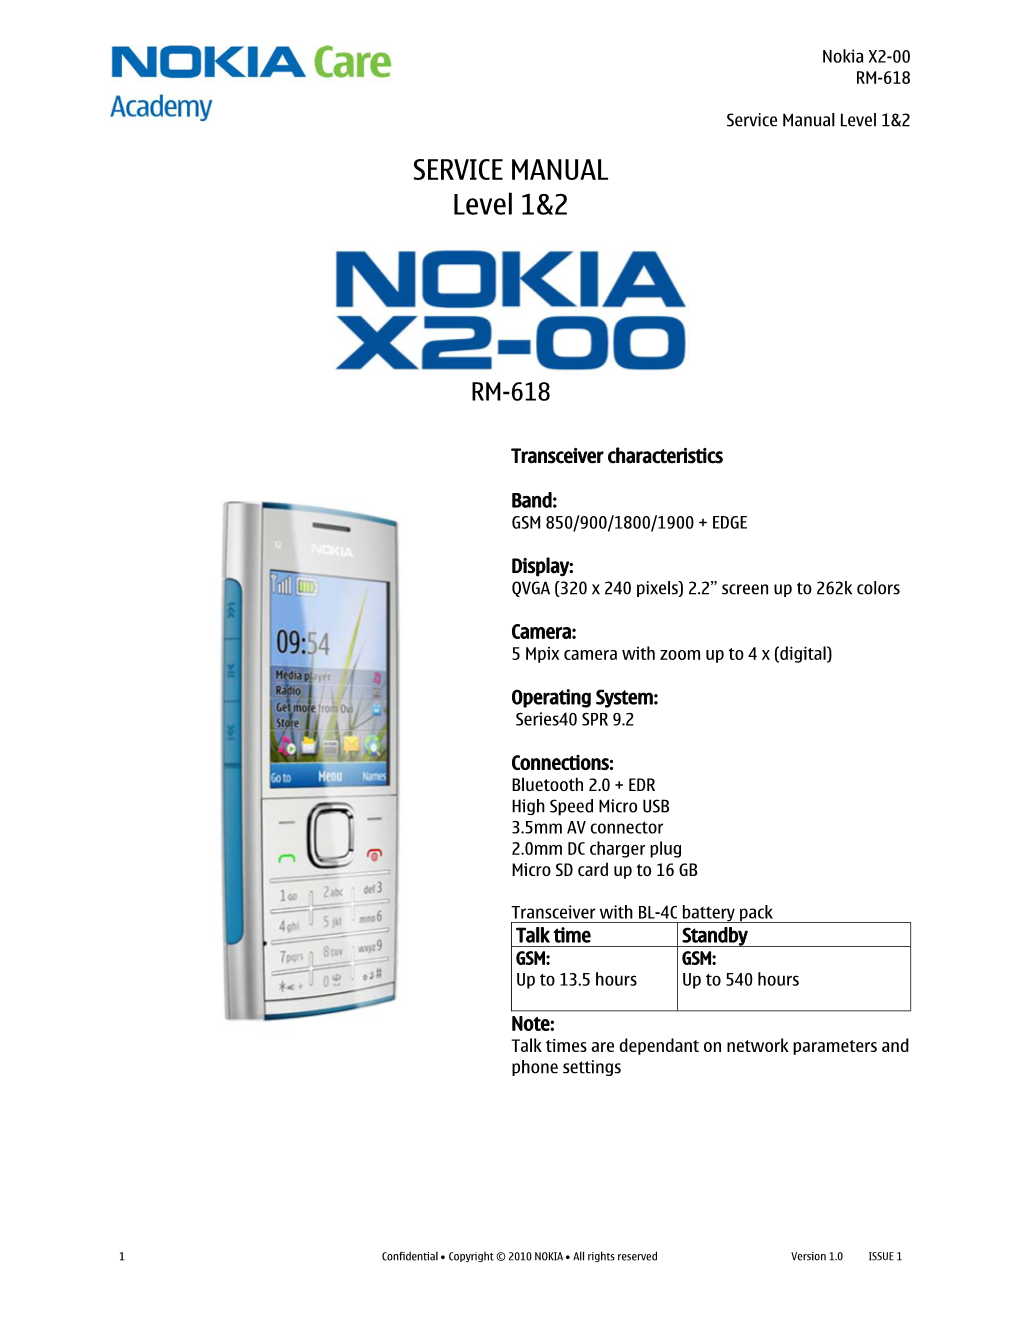 Nokia X2 RM-618 Service Manual L1L2